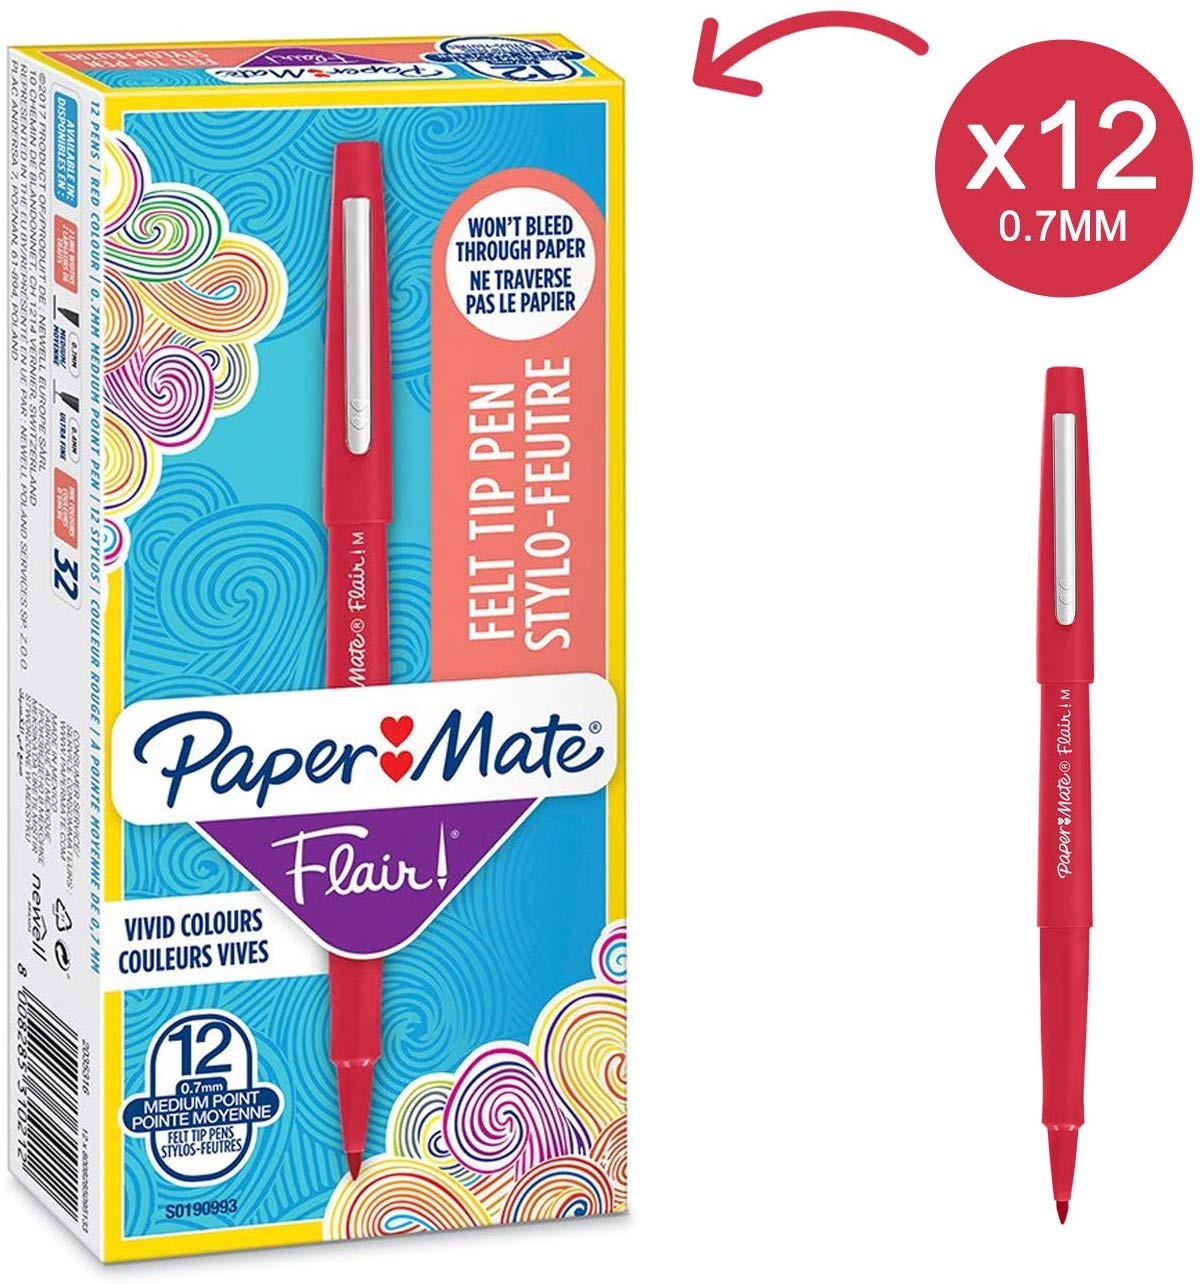 PaperMate+Flair+Original+Felt+Tip+Pens+Red+%28Pack+of+12%29+S0190993